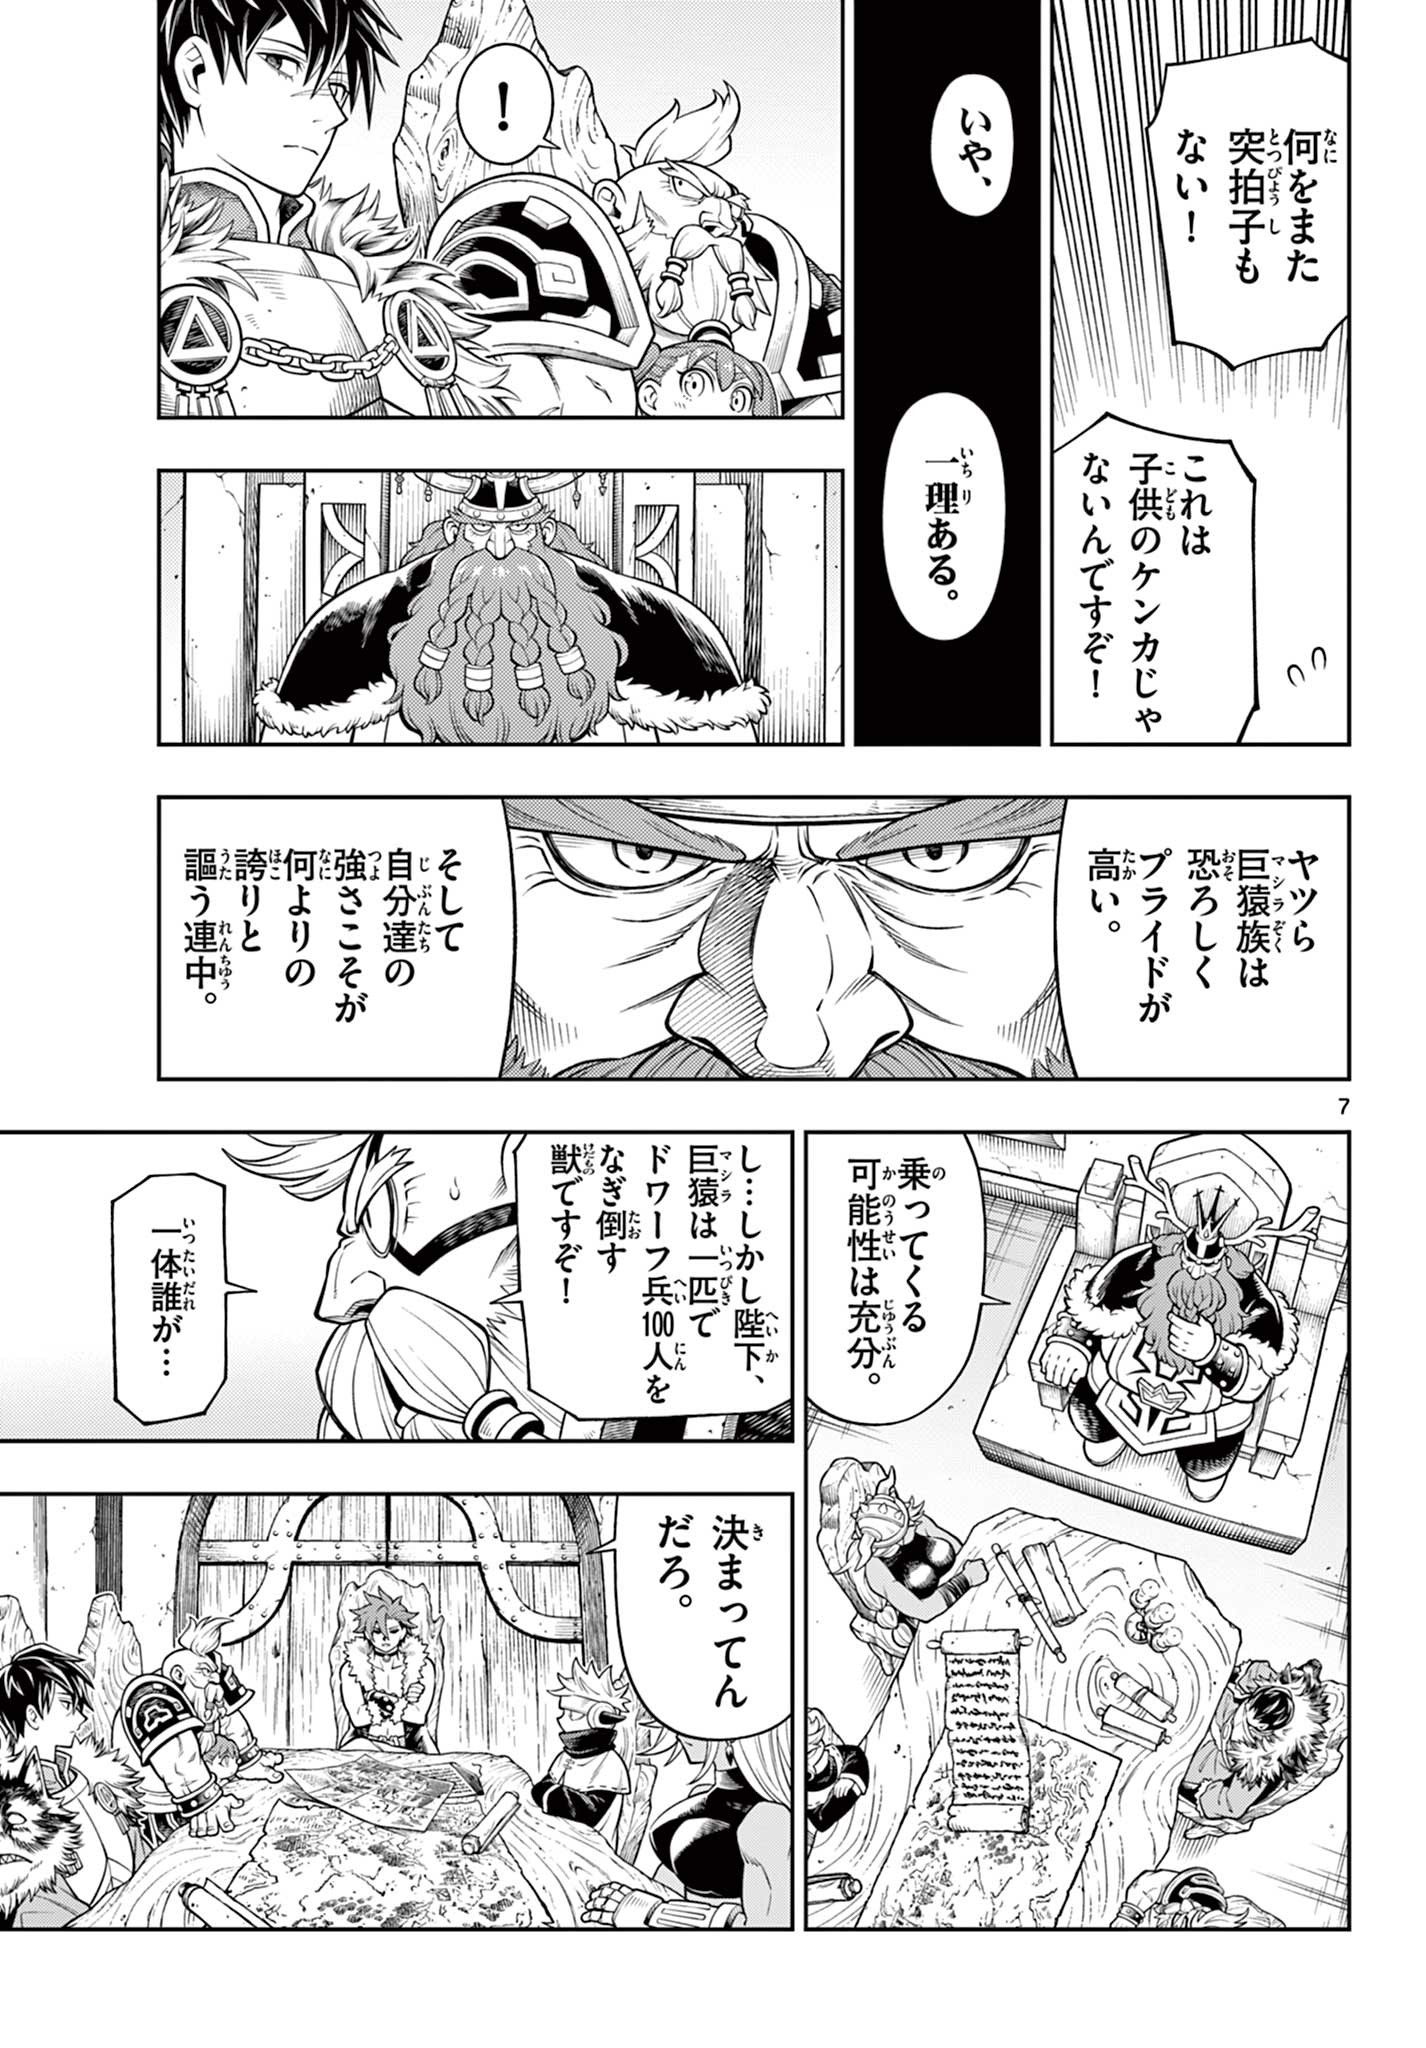 Soara to Mamono no ie - Chapter 23 - Page 7